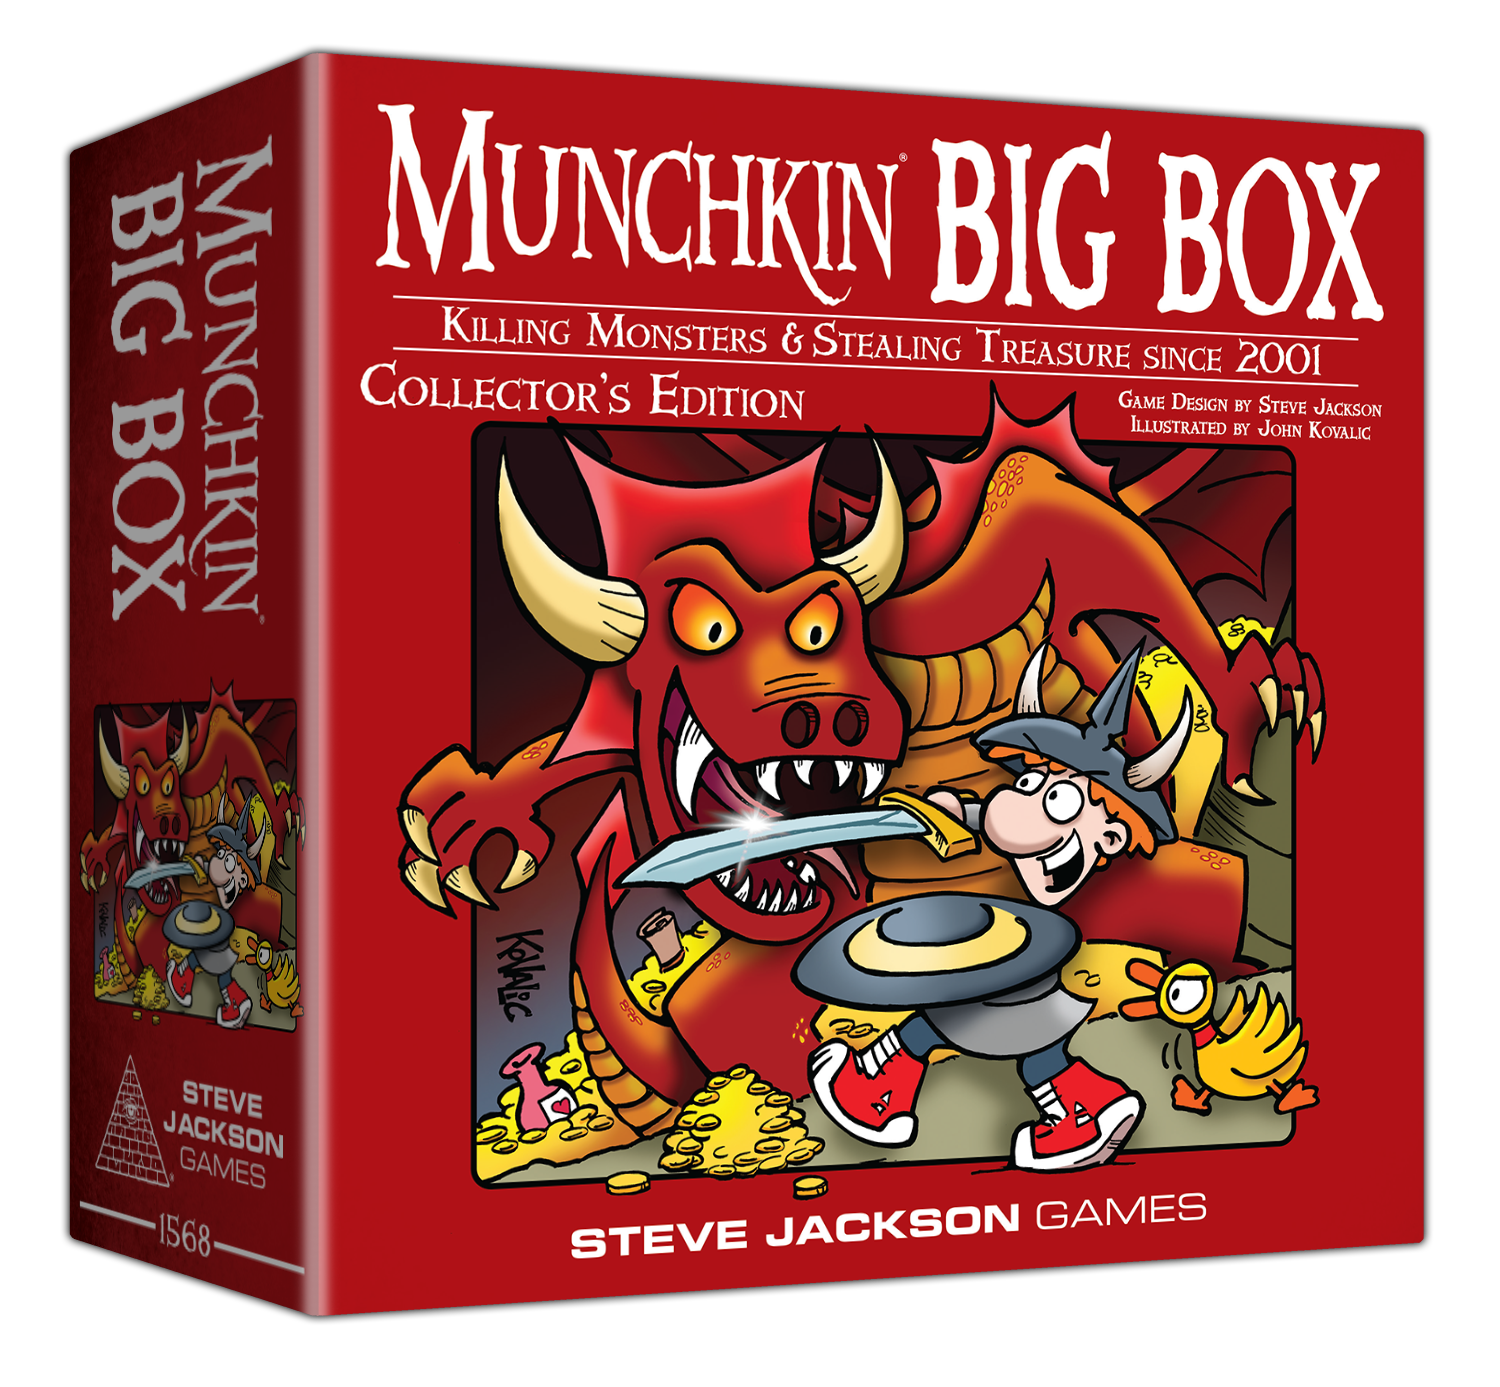 Steve Jackson Games Debuts Munchkin Big Box